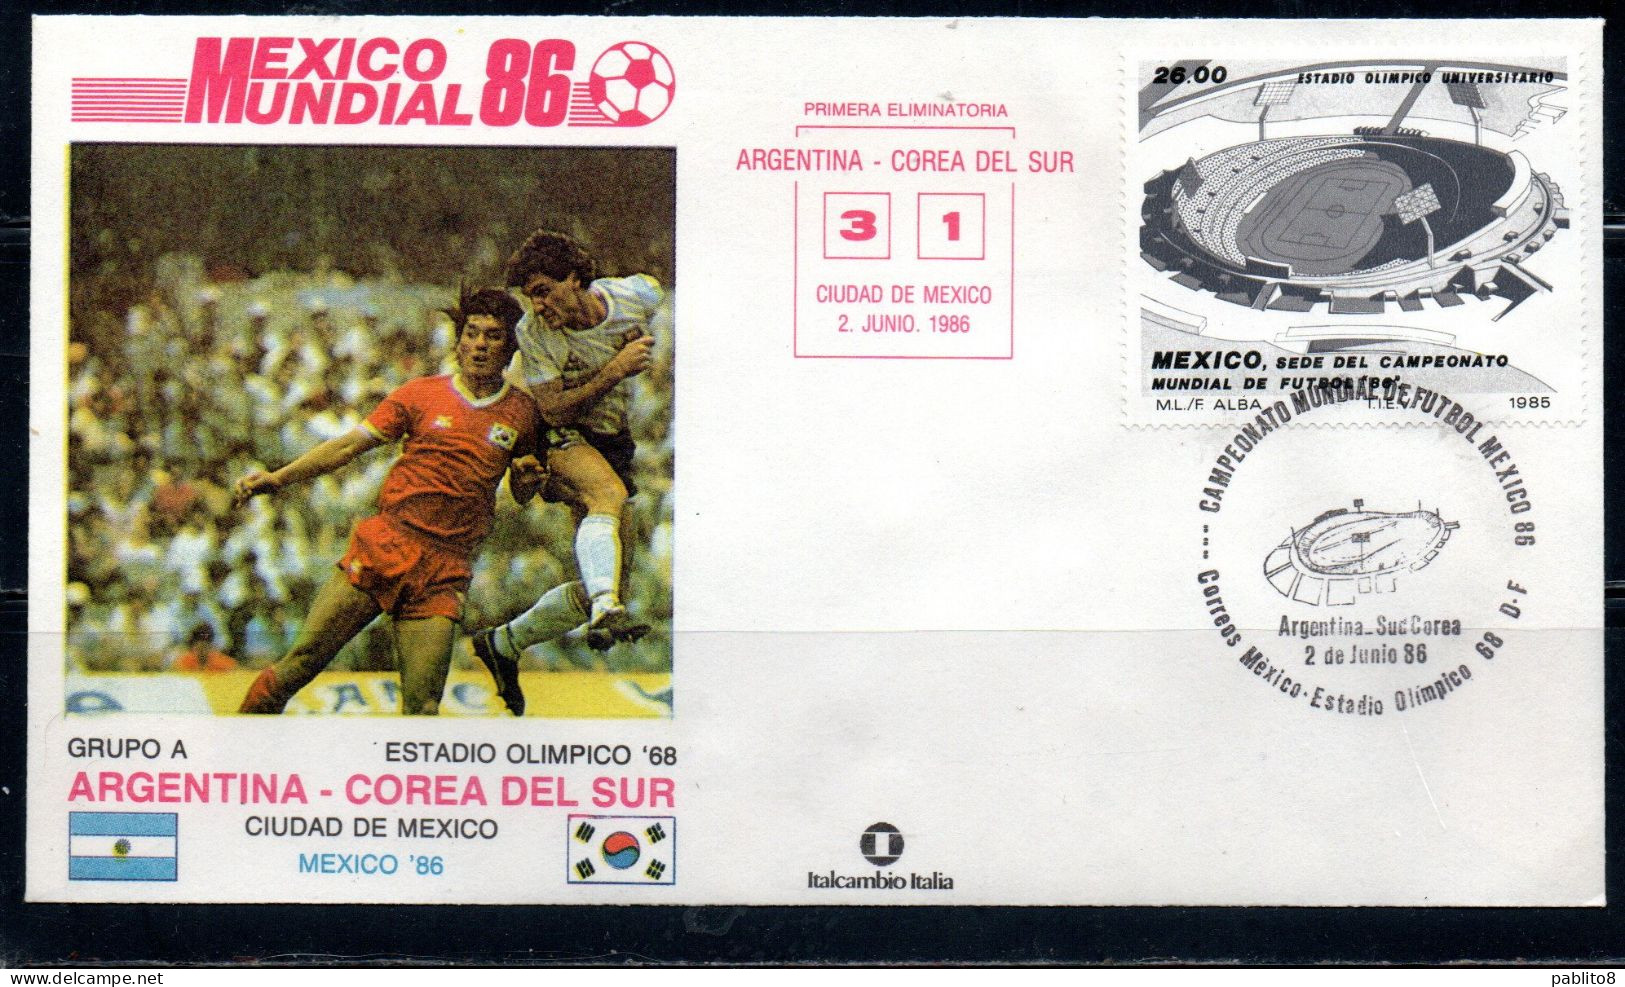 MEXICO 86 MESSICO 1986 SOCCER FIFA WORLD CUP CALCIO ARGENTINA - COREA DEL SUR SOUTH SUD 3-1 CIUDAD DE MEXICO FDC COVER - Mexico